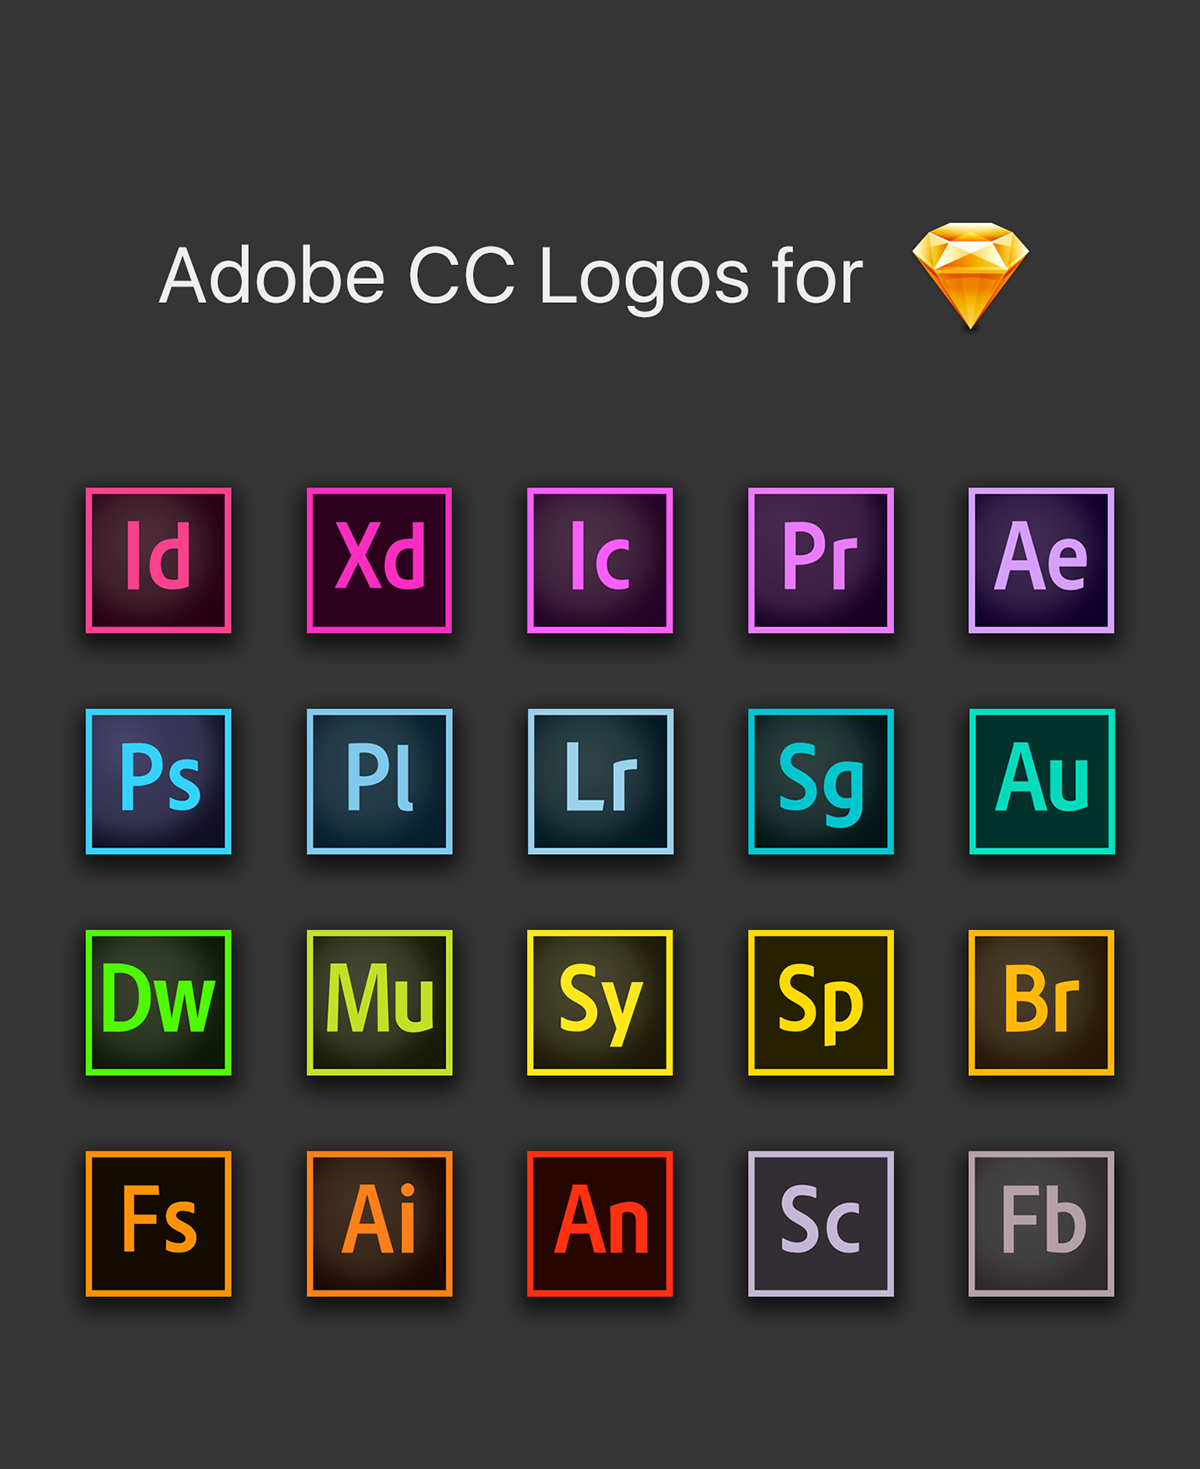 Adobe CC Logos for Sketch | Behance